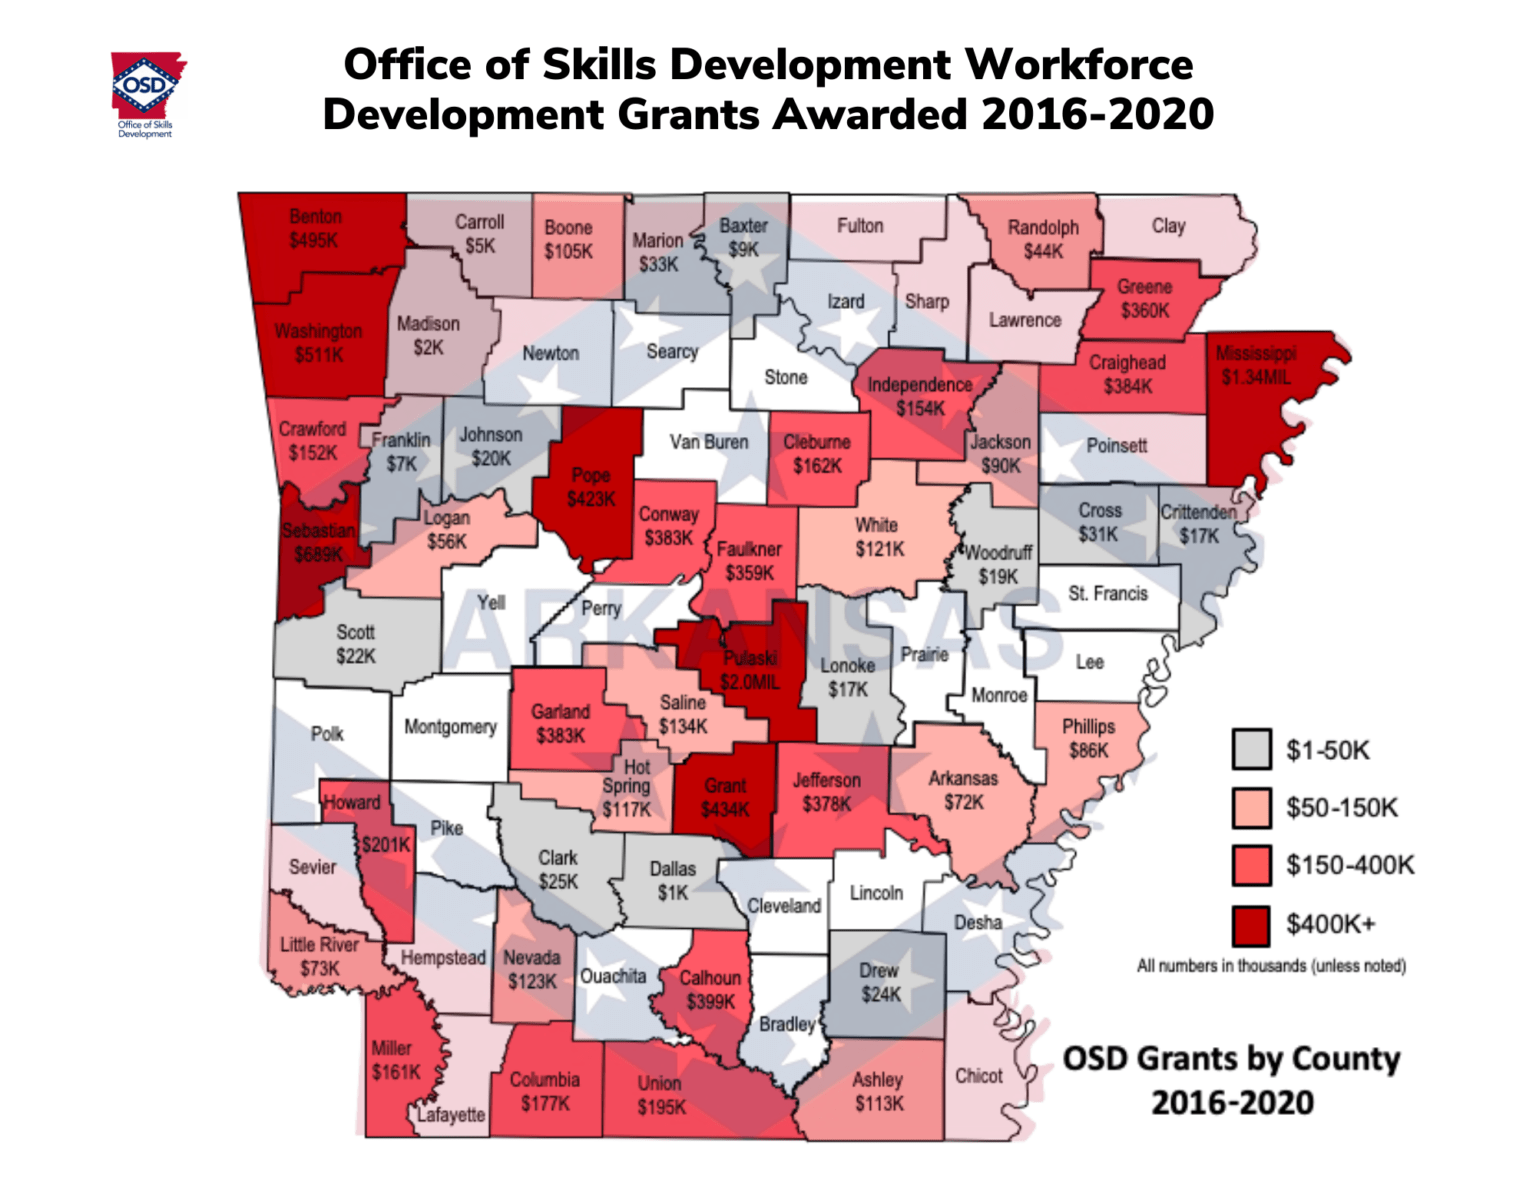 Training Grants Arkansas Office of Skills Development